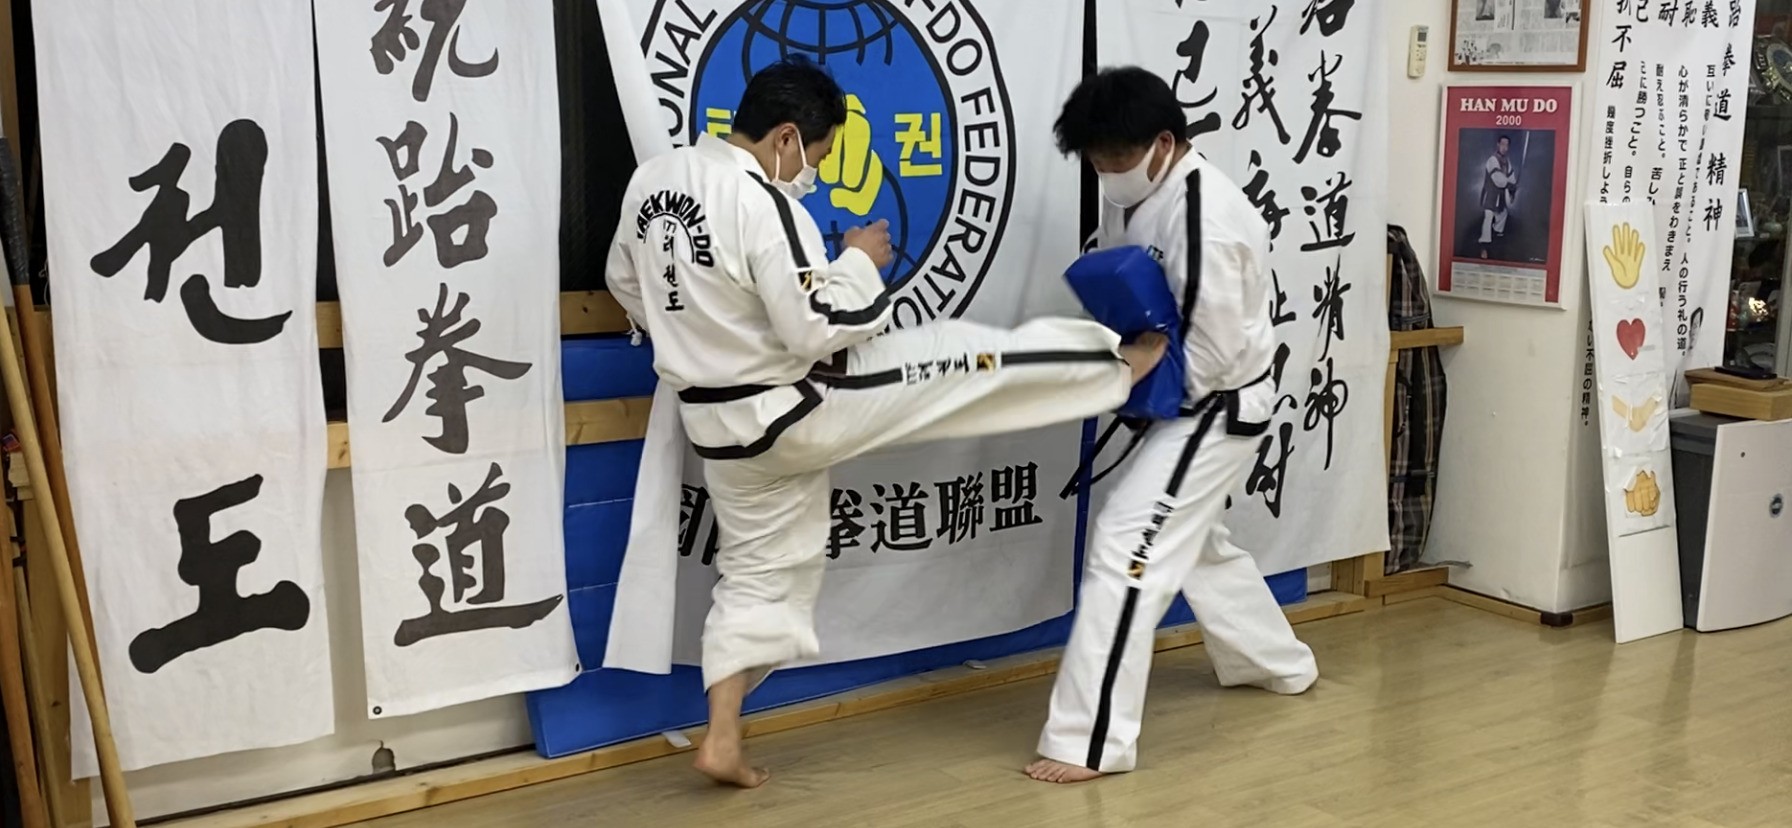 taekwondo-toda-20210213 (4)